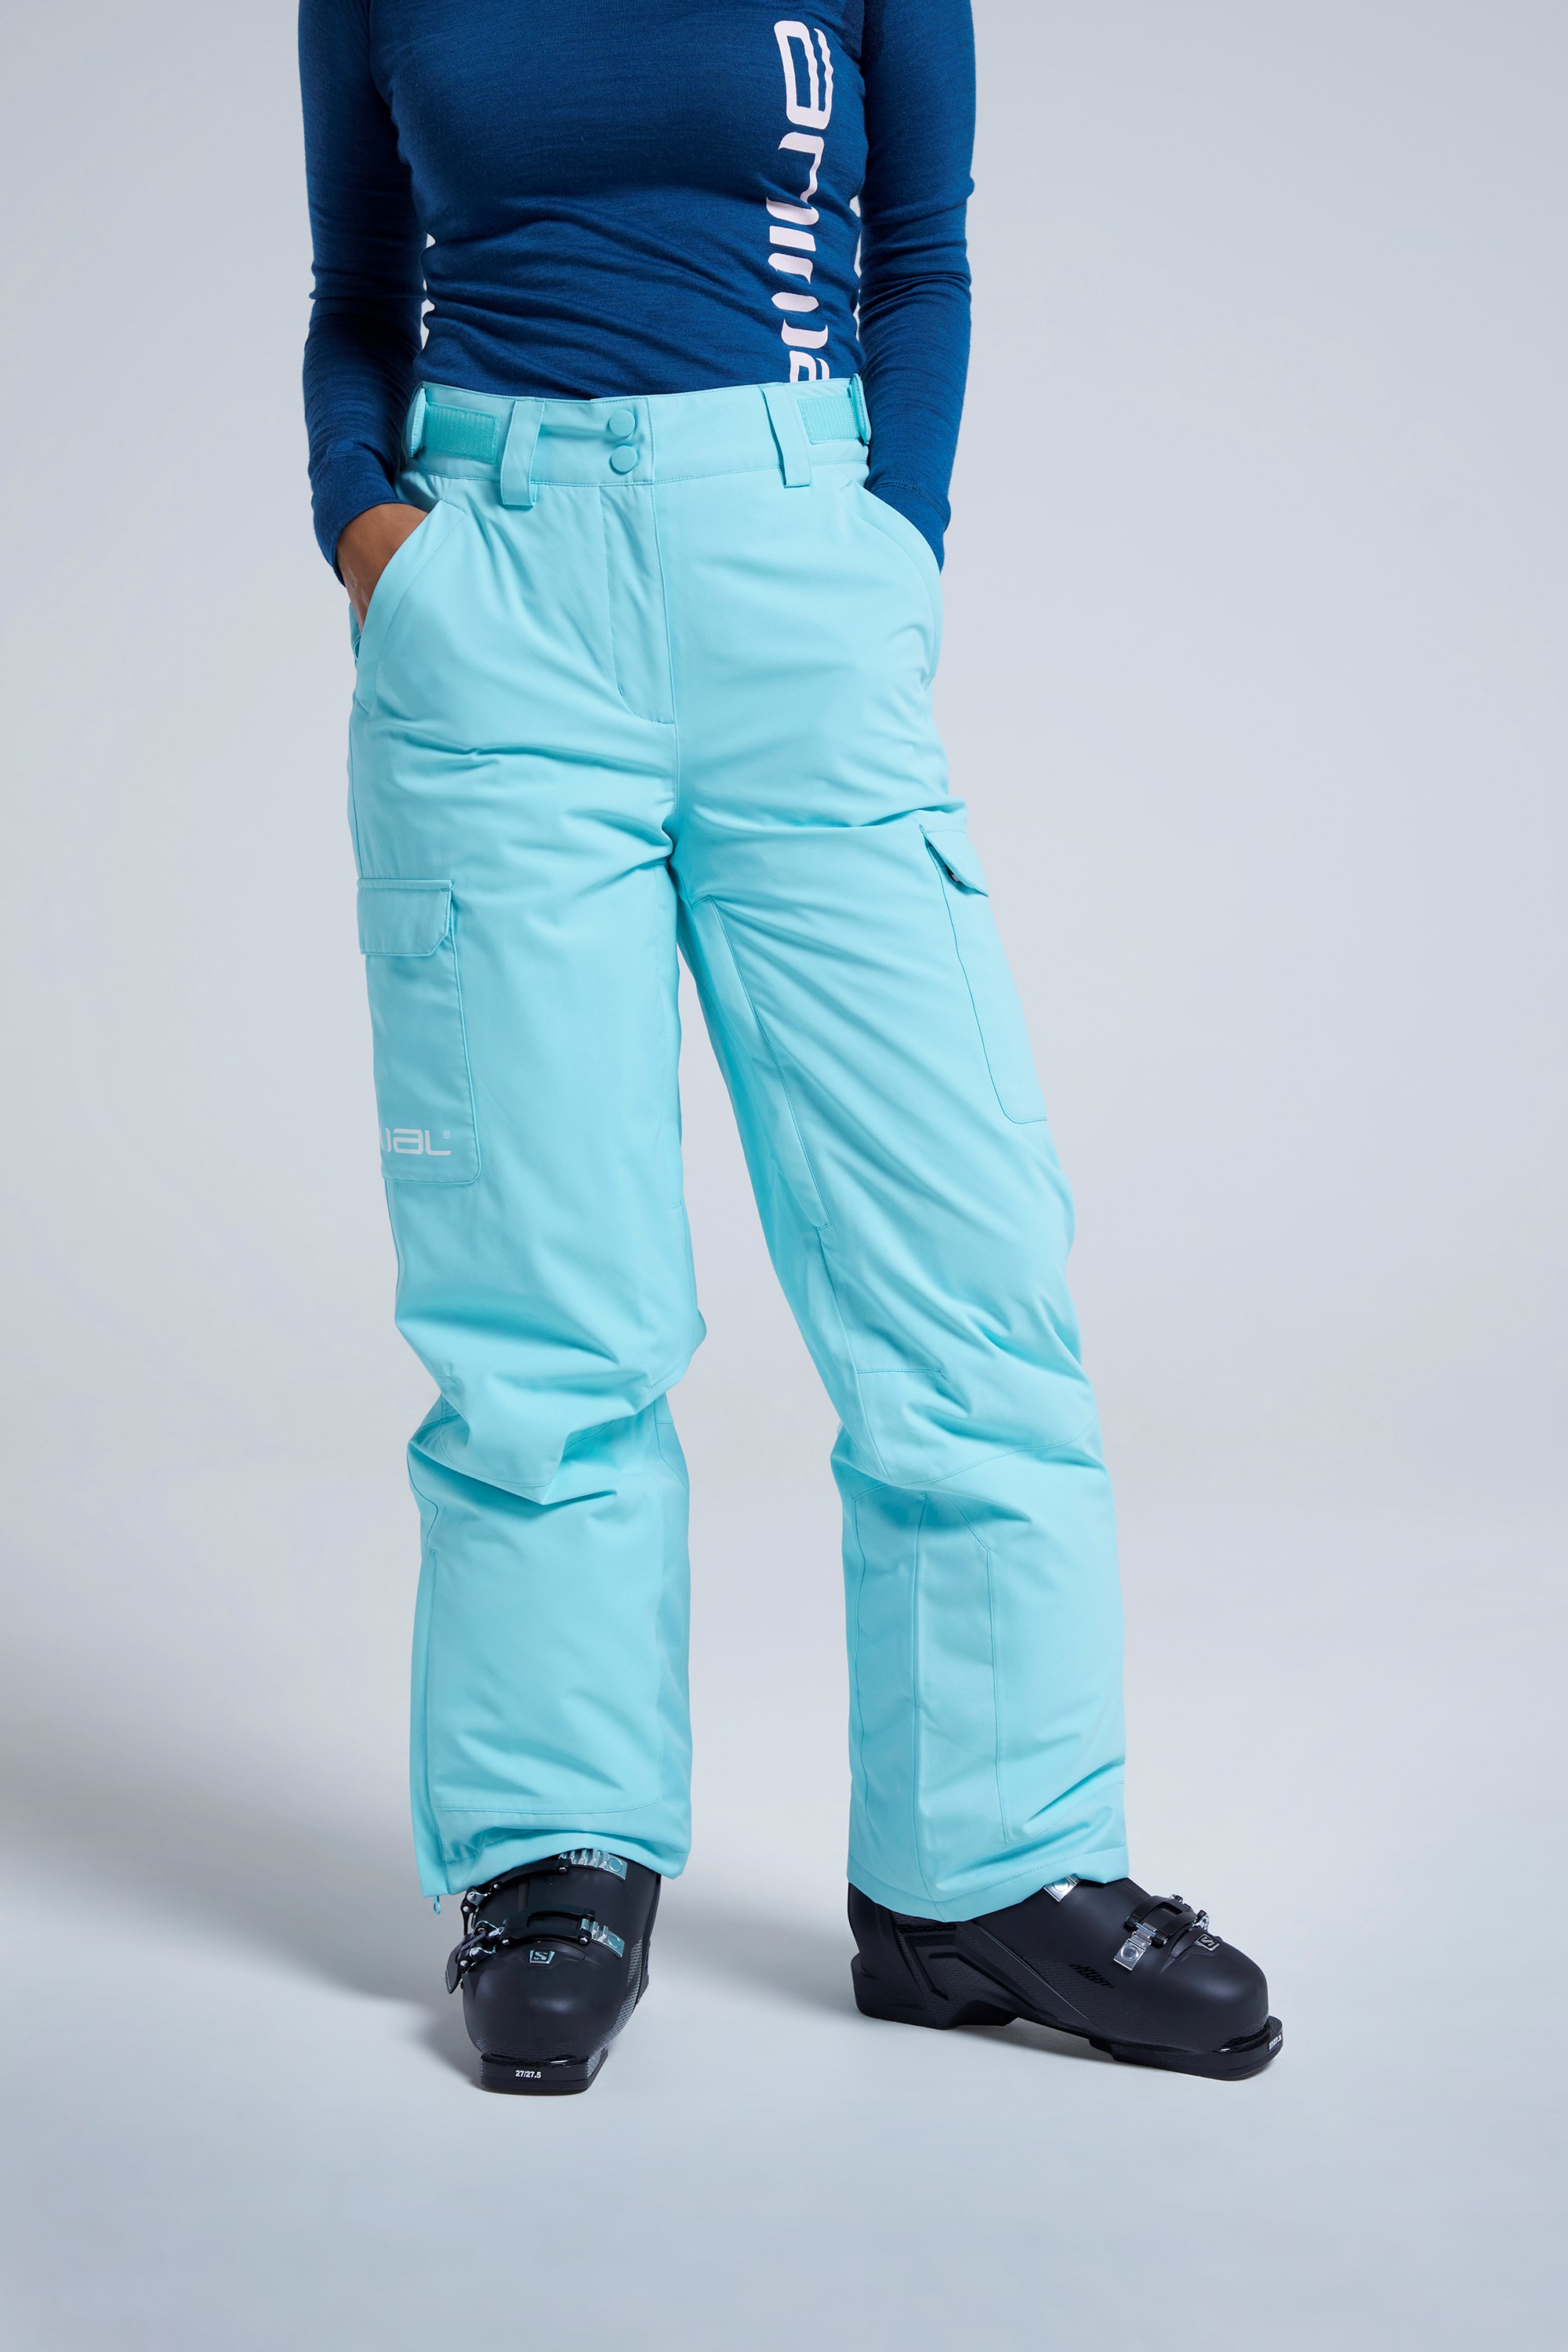 womens ski pants